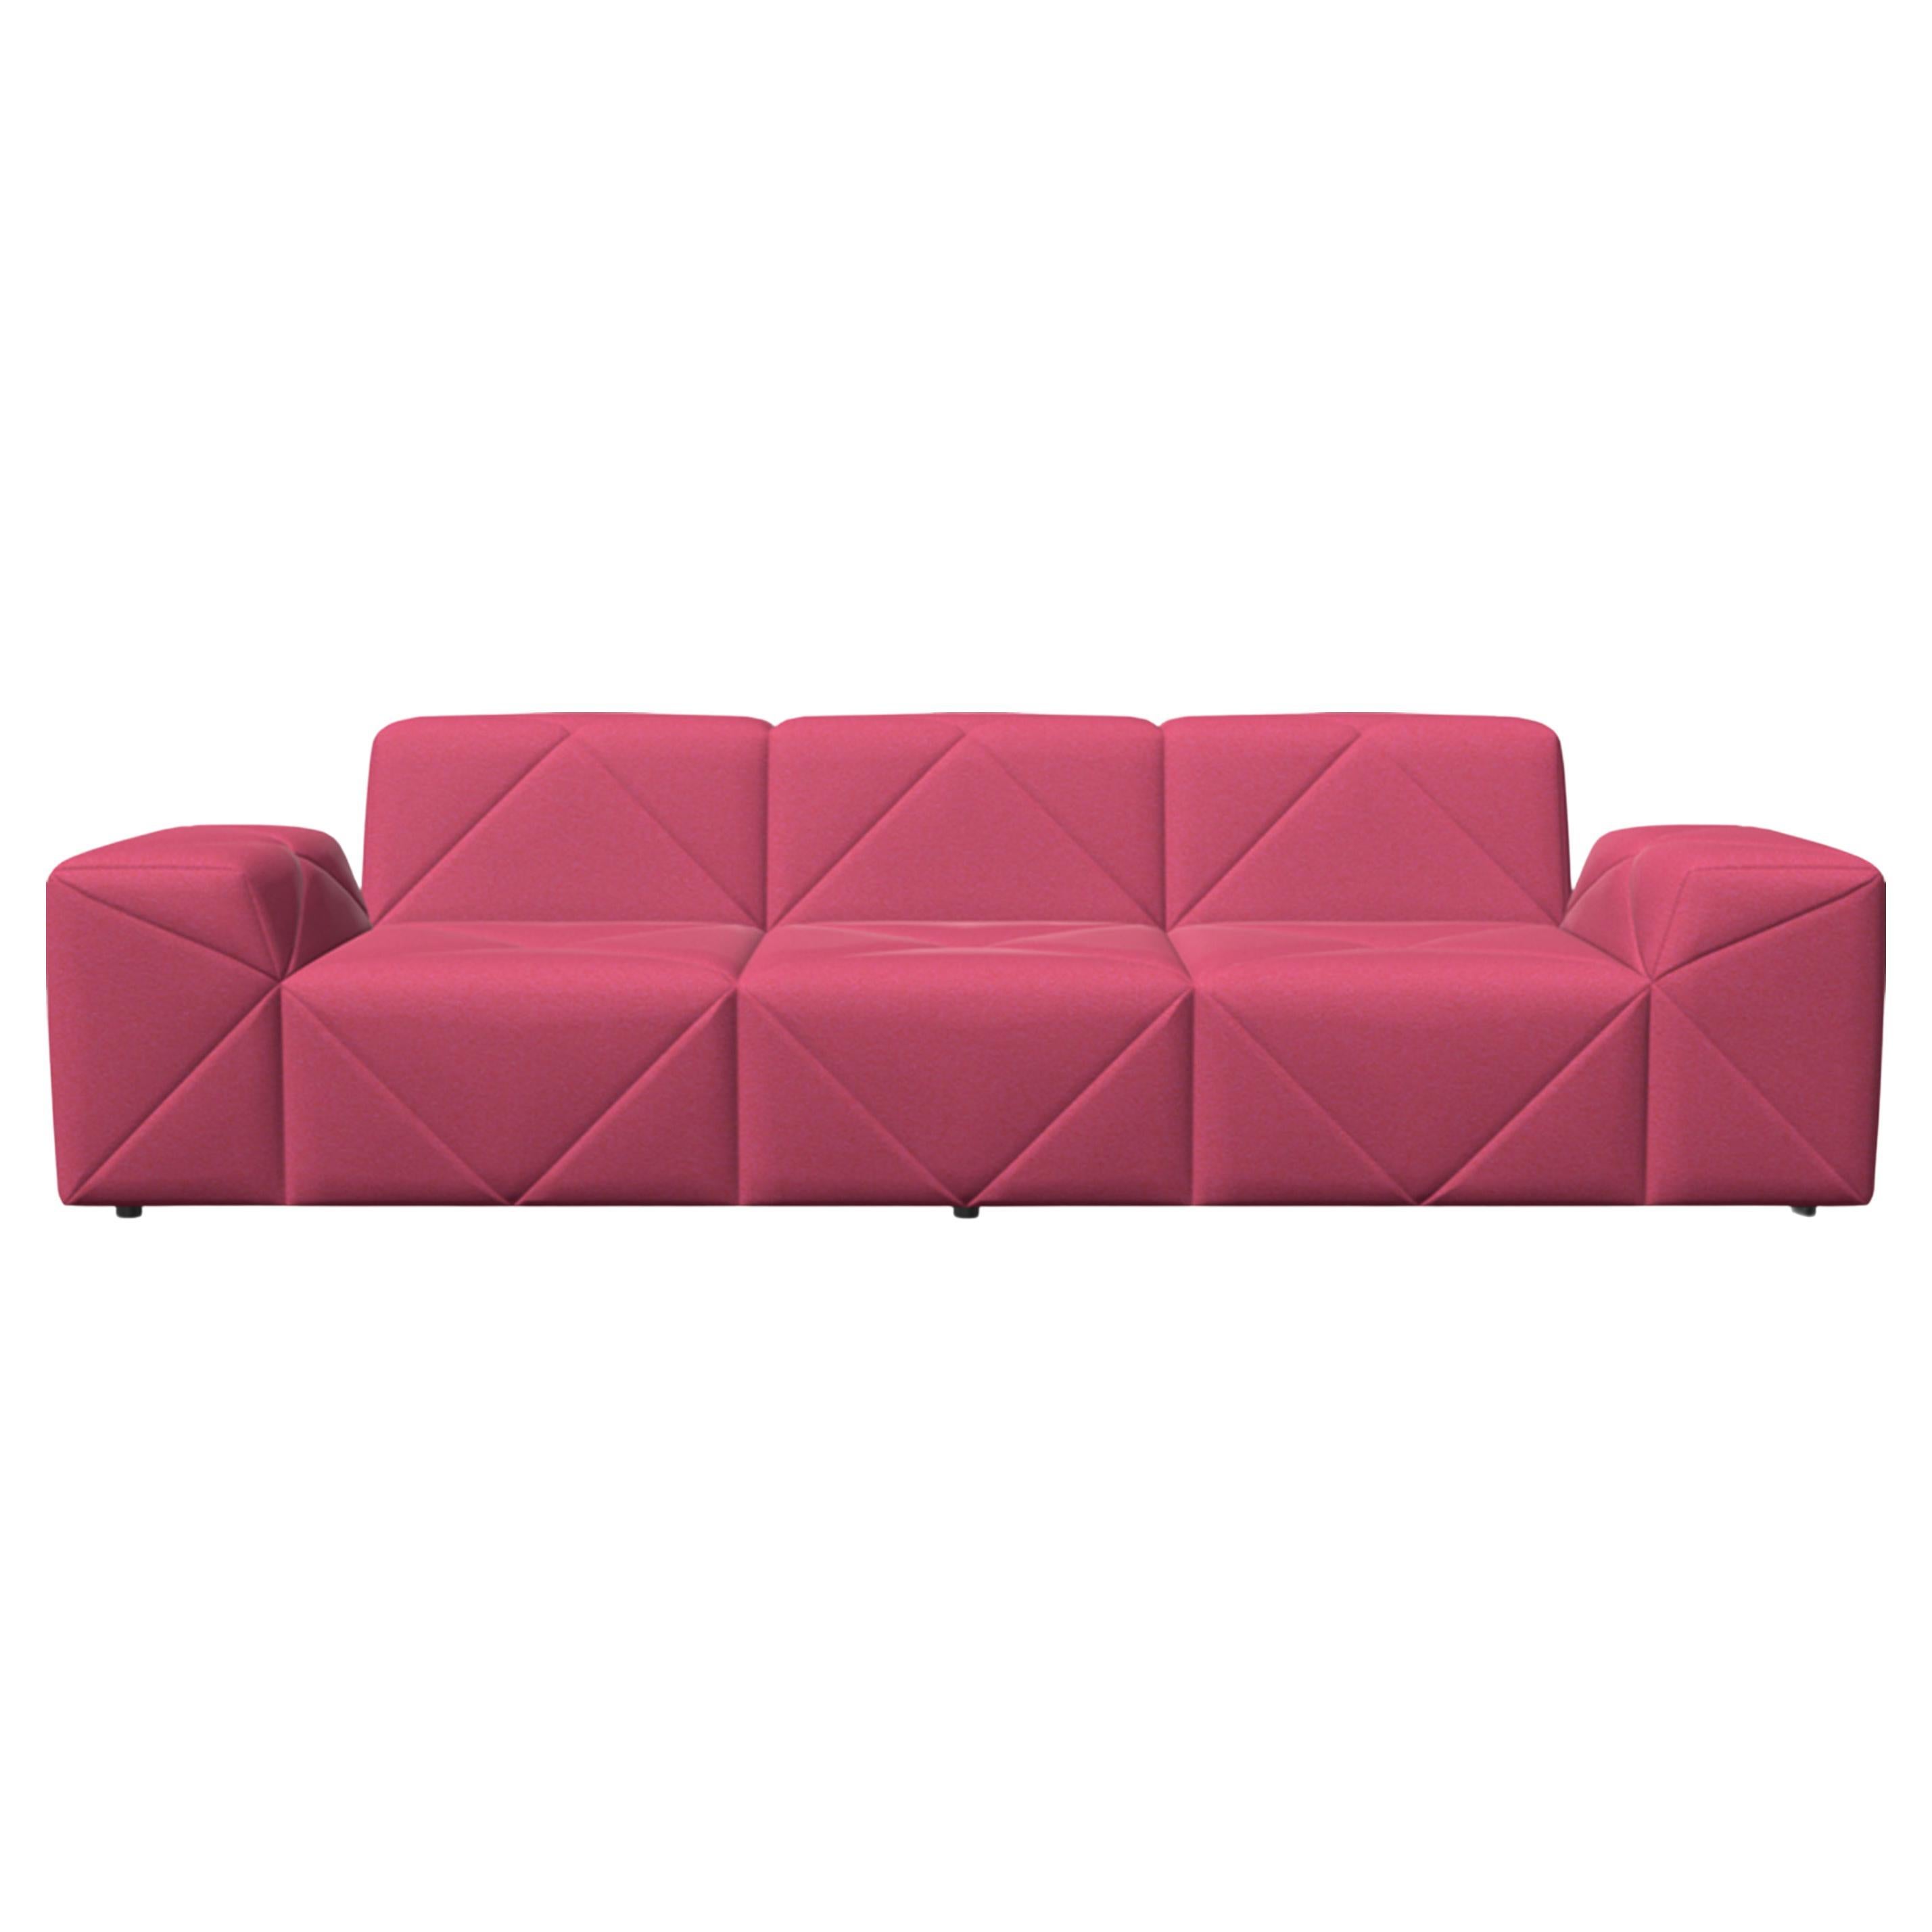 Moooi BFF Triple Seater TE01 Low Sofa in Divina 3, 626 Pink Upholstery